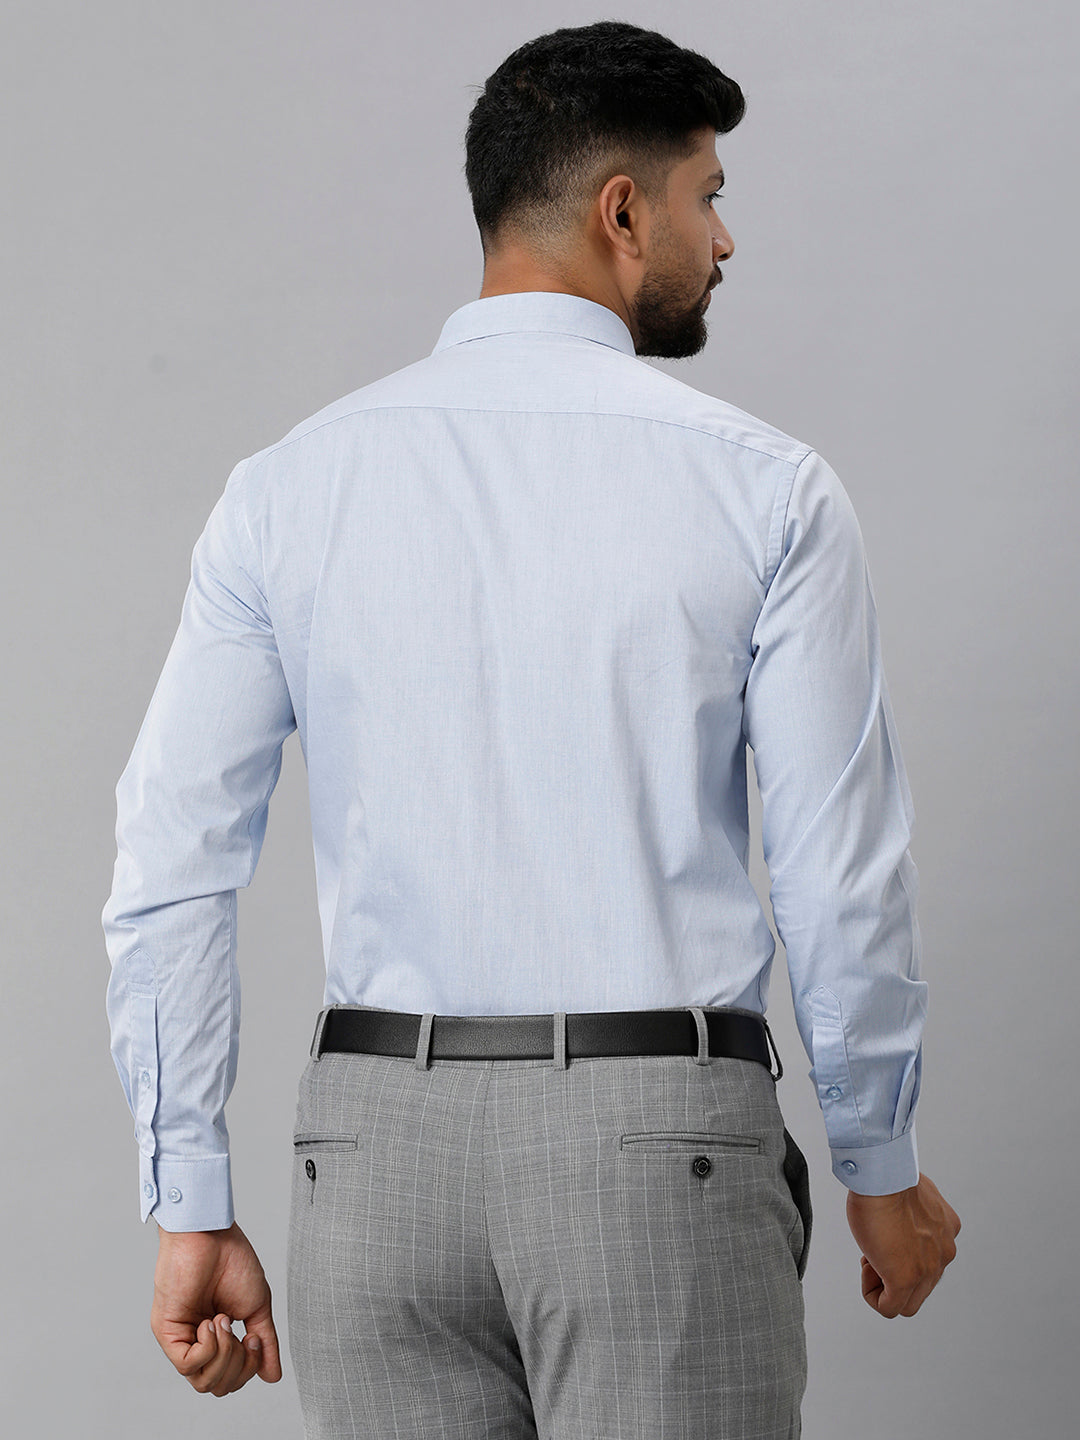 Mens Premium Cotton Formal Shirt Full Sleeves Blue MH G119-Back view